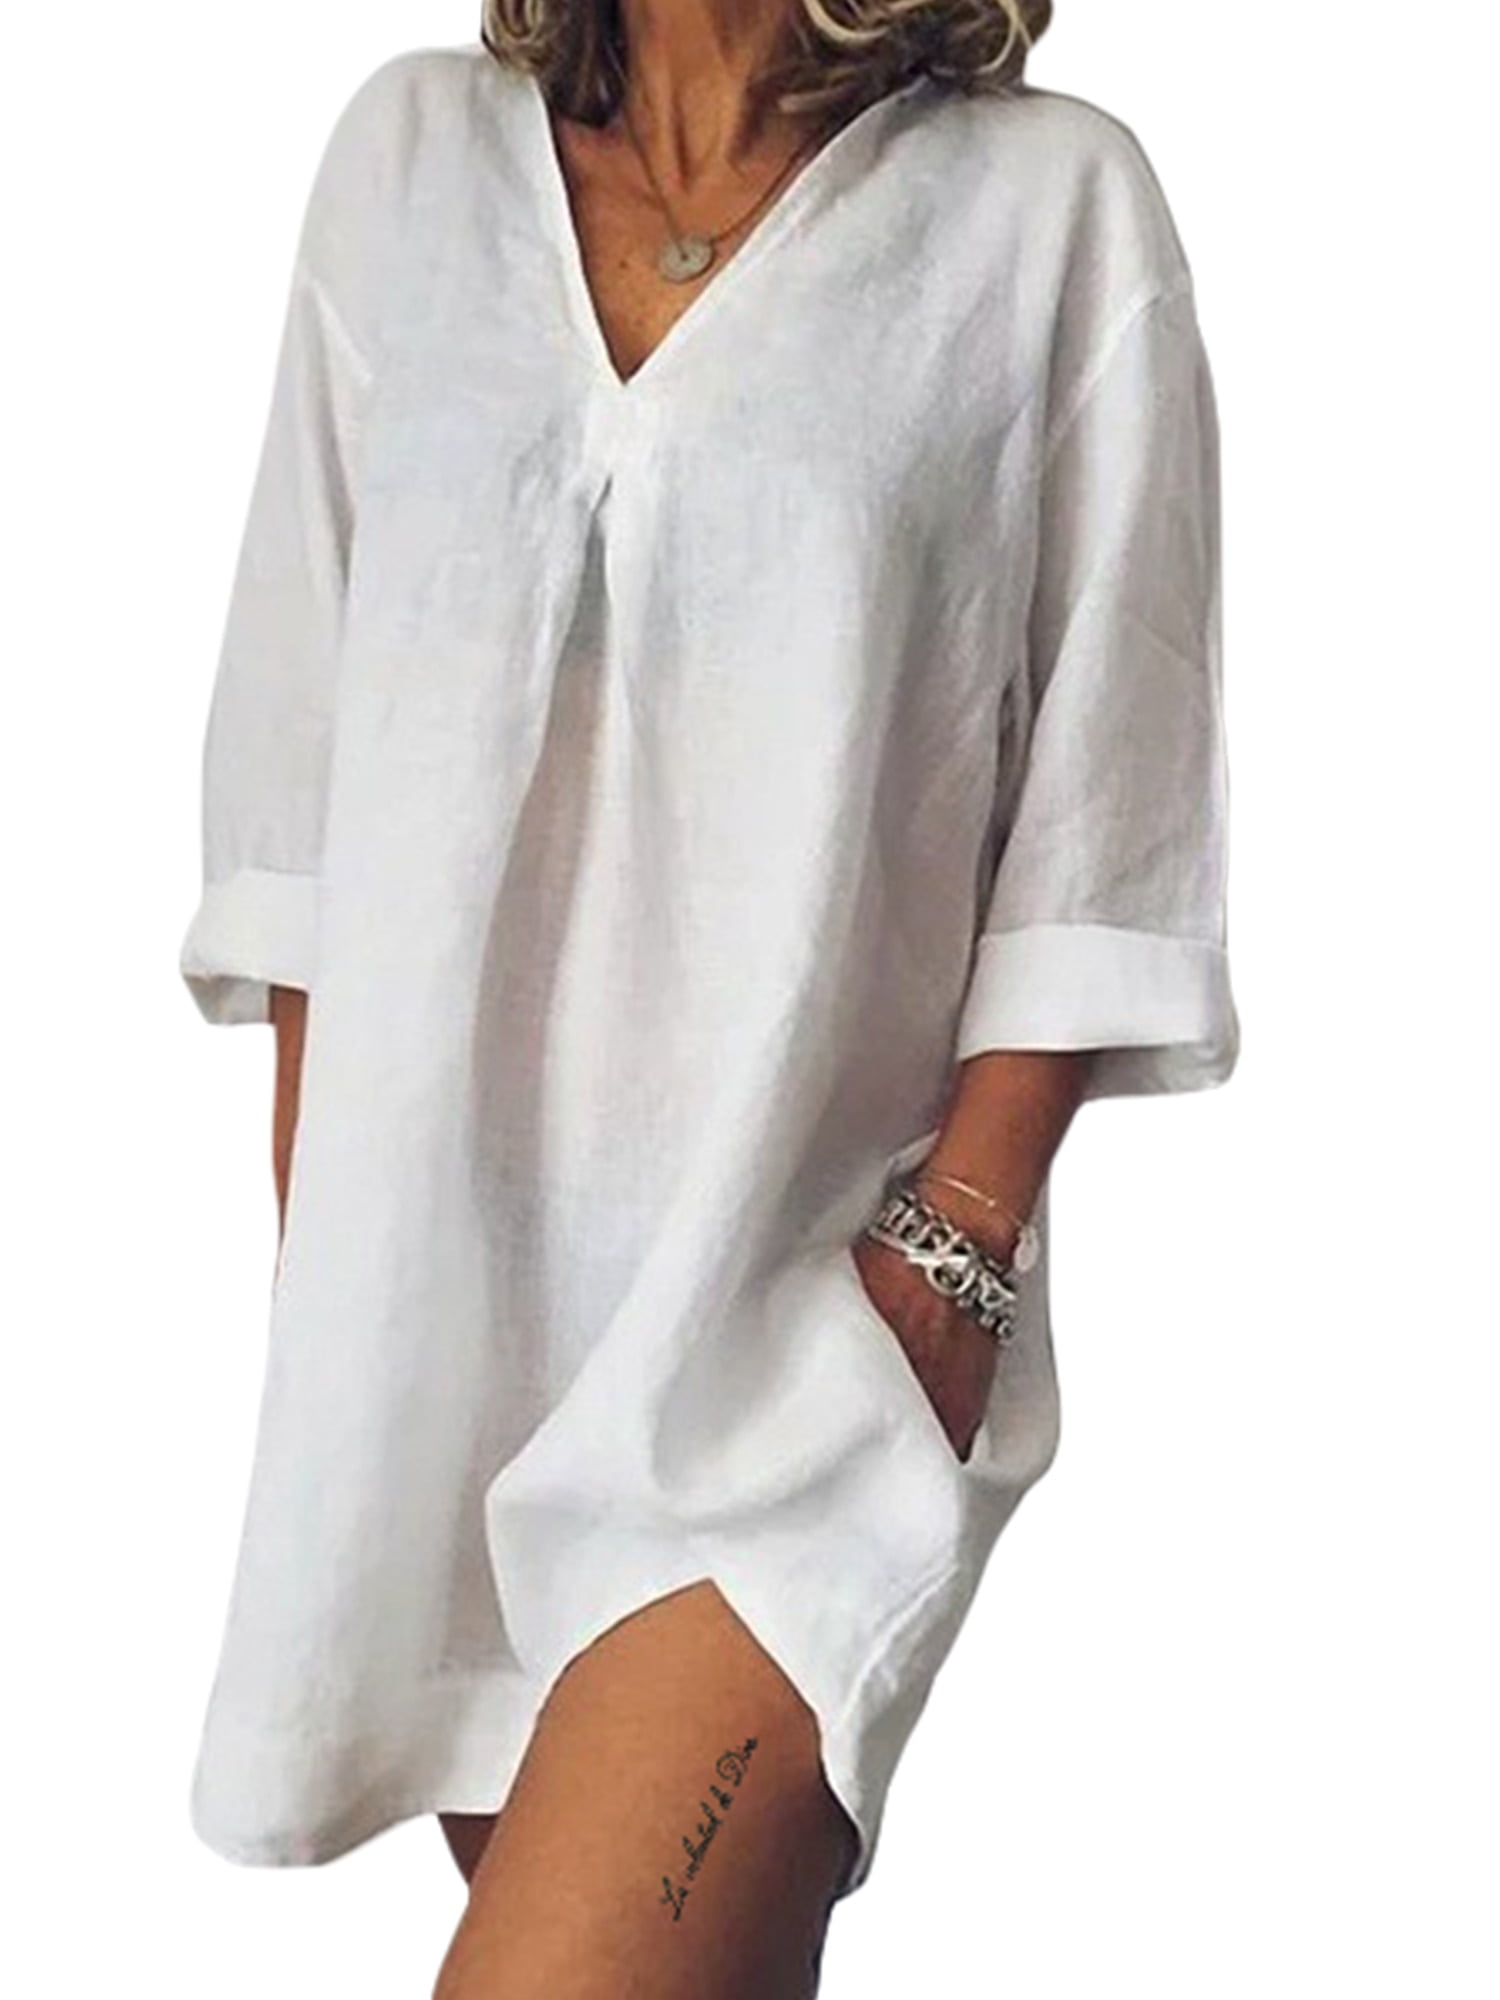 ZANZEA Women 3/4 Sleeve Casual Long Shirt Dress Plain Loose Oversize Blouse Tops